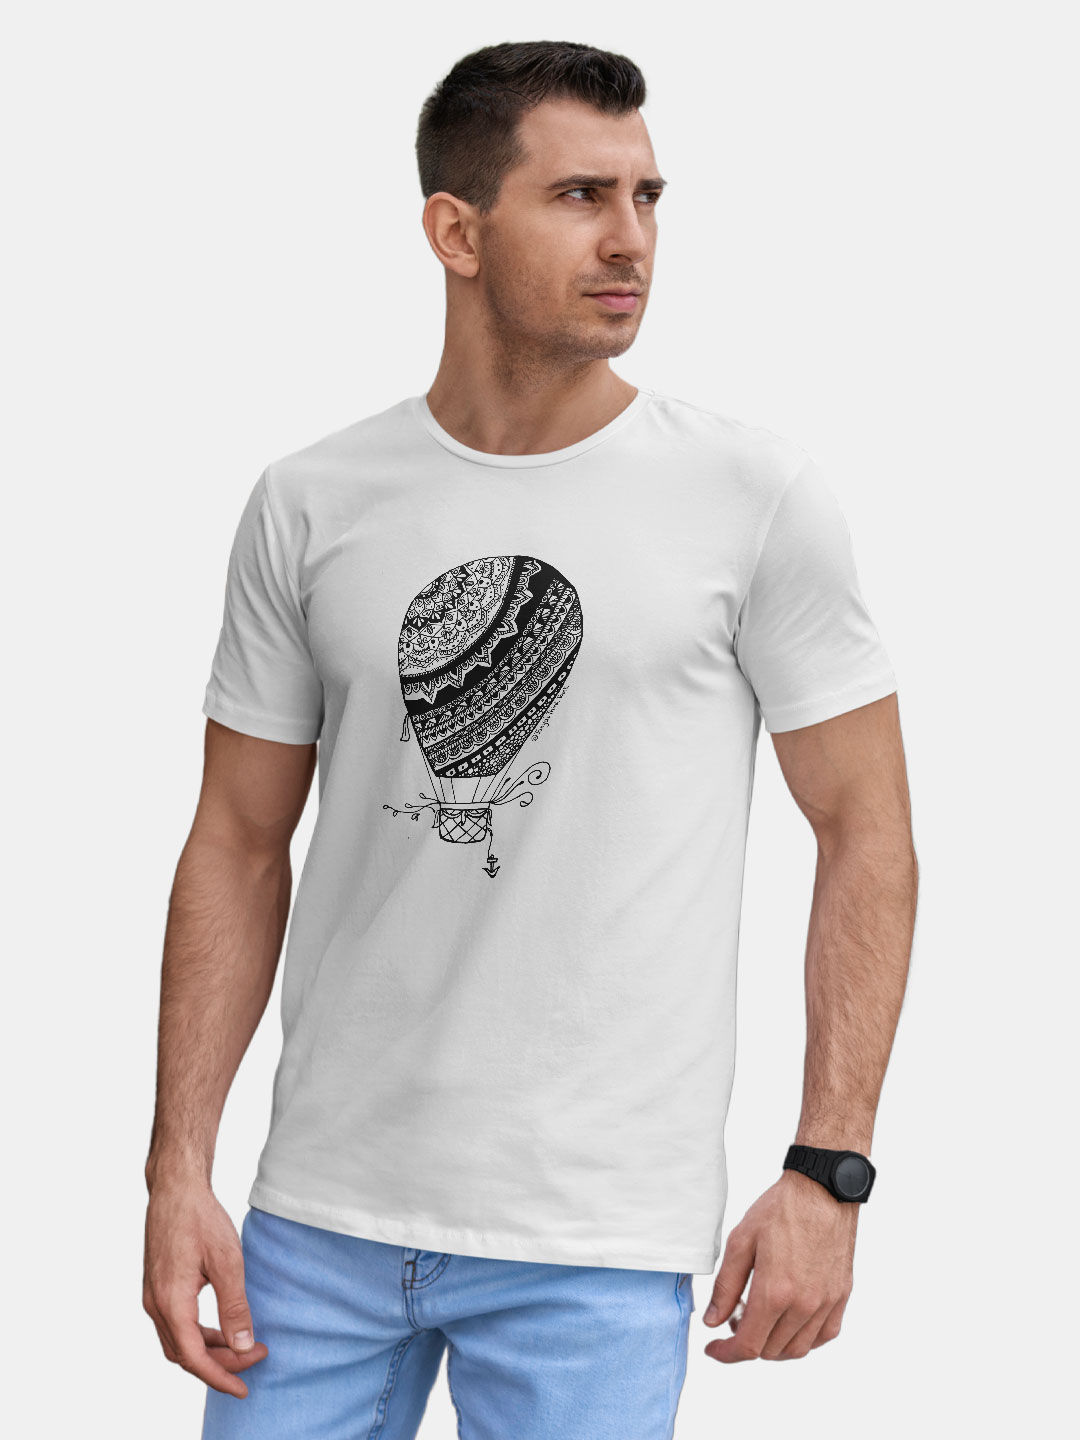 Buy Hot Air Balloon White - Male Designer T-Shirts T-Shirts Online